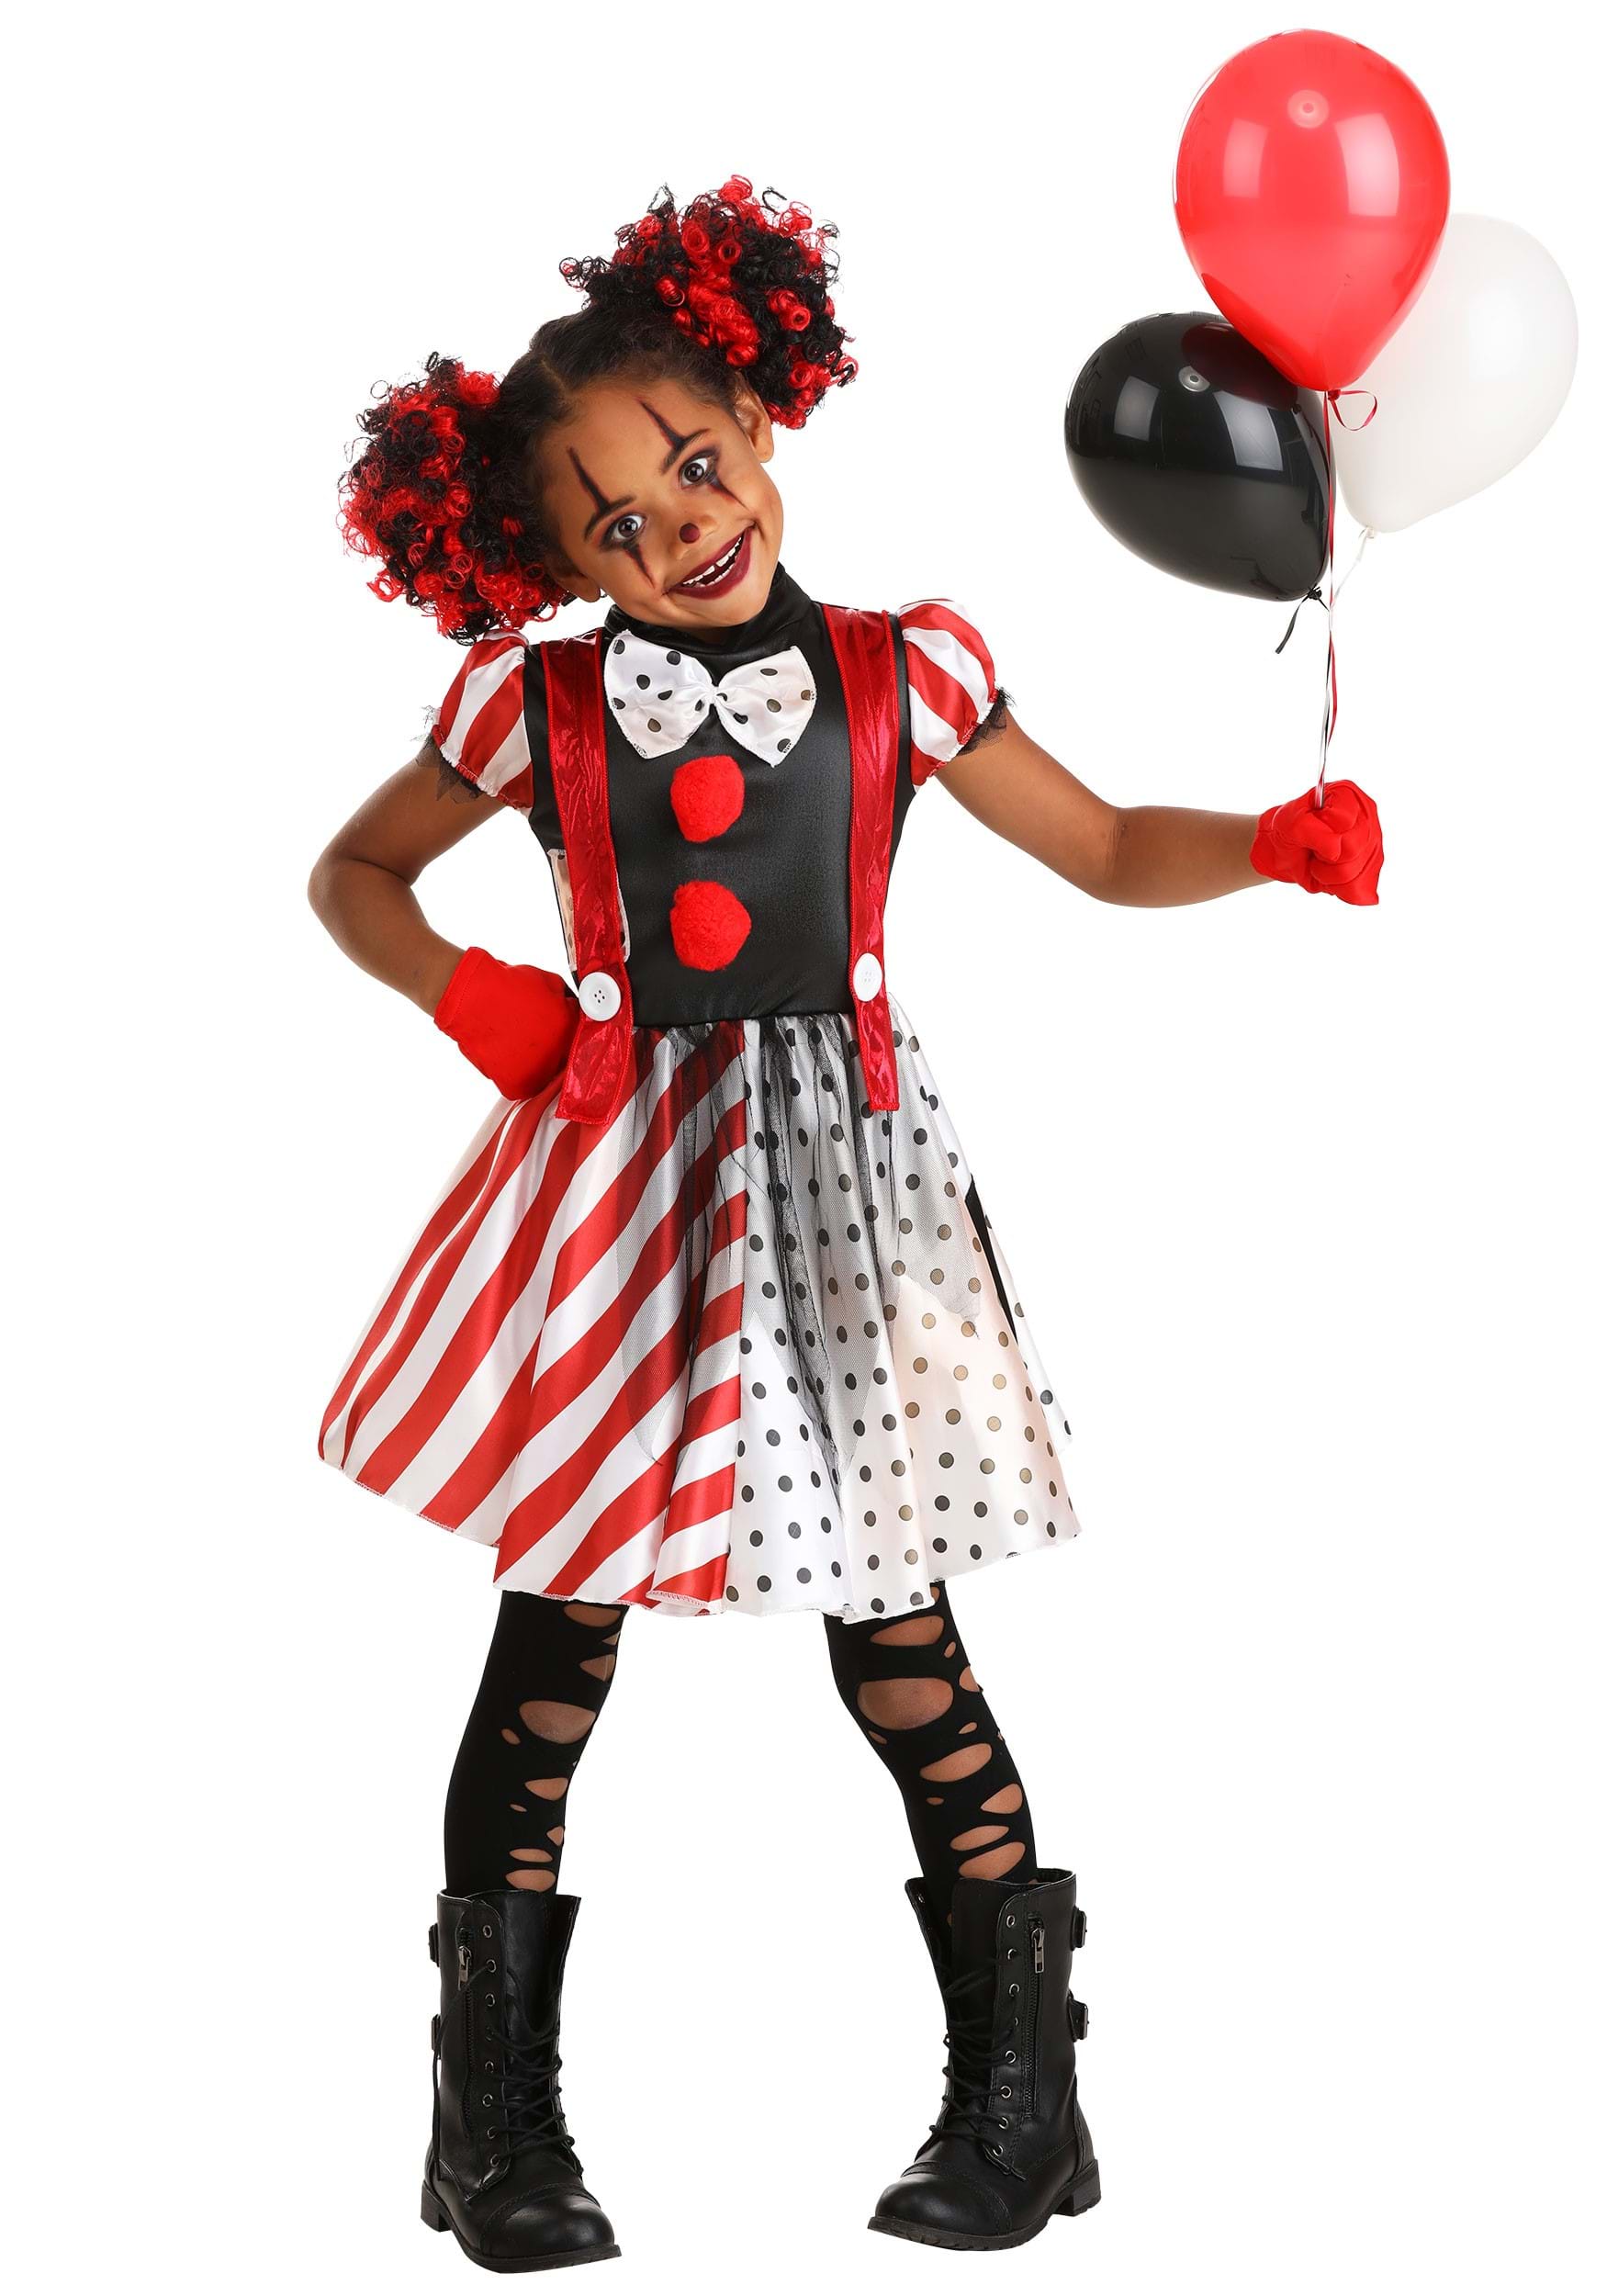 Girls Little Clown Fancy Dress Up Party Costume Halloween Child 